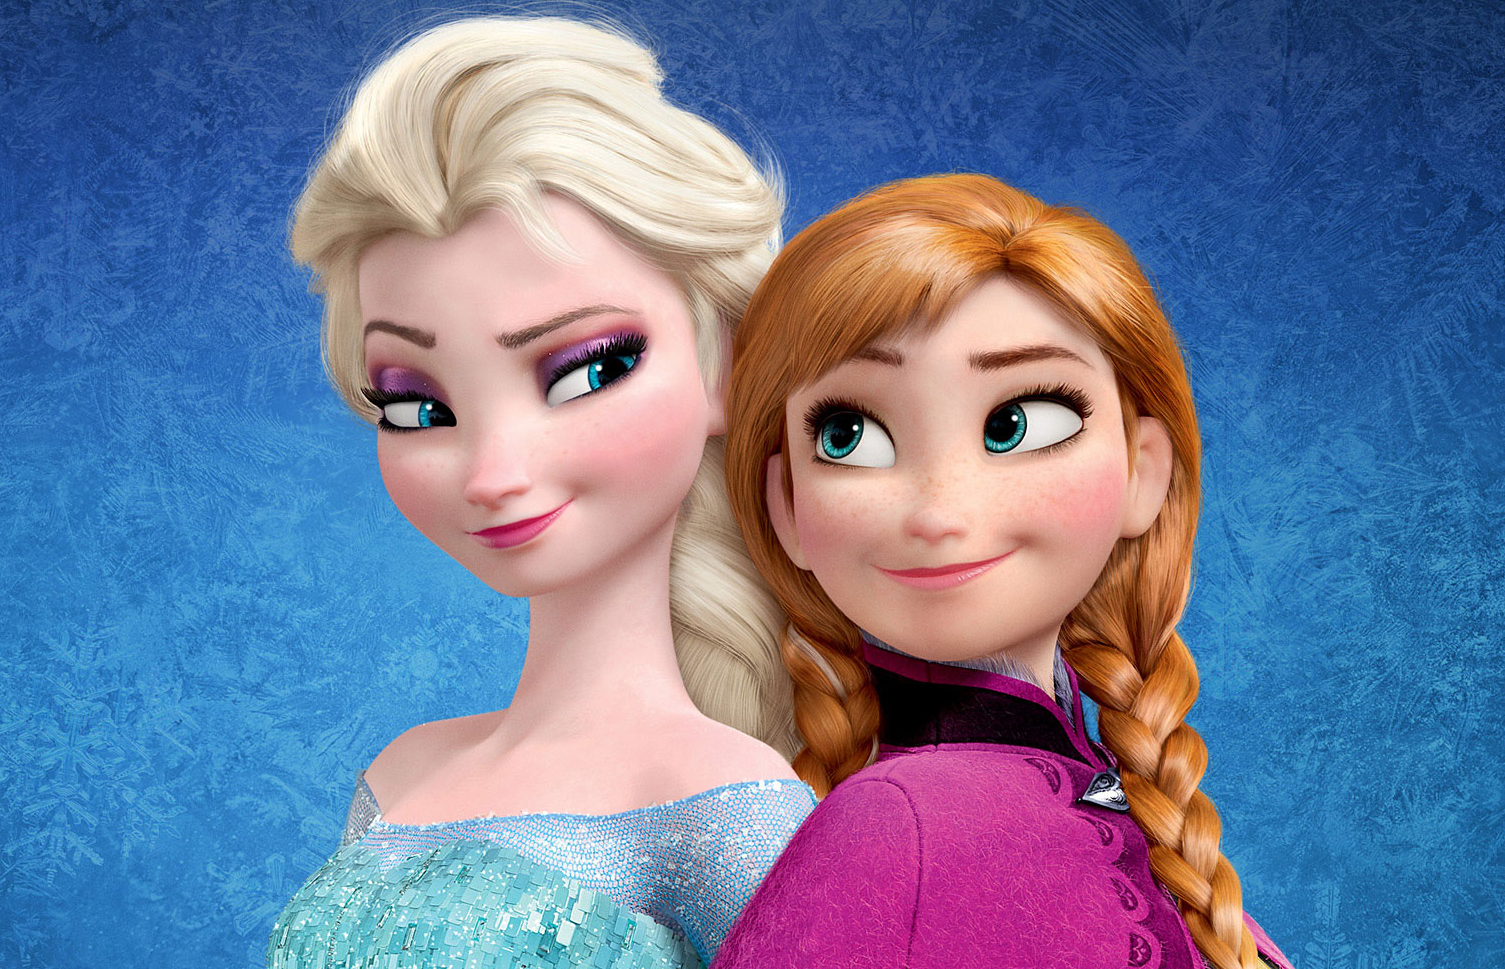 Elsa and Anna, Frozen, 2013.